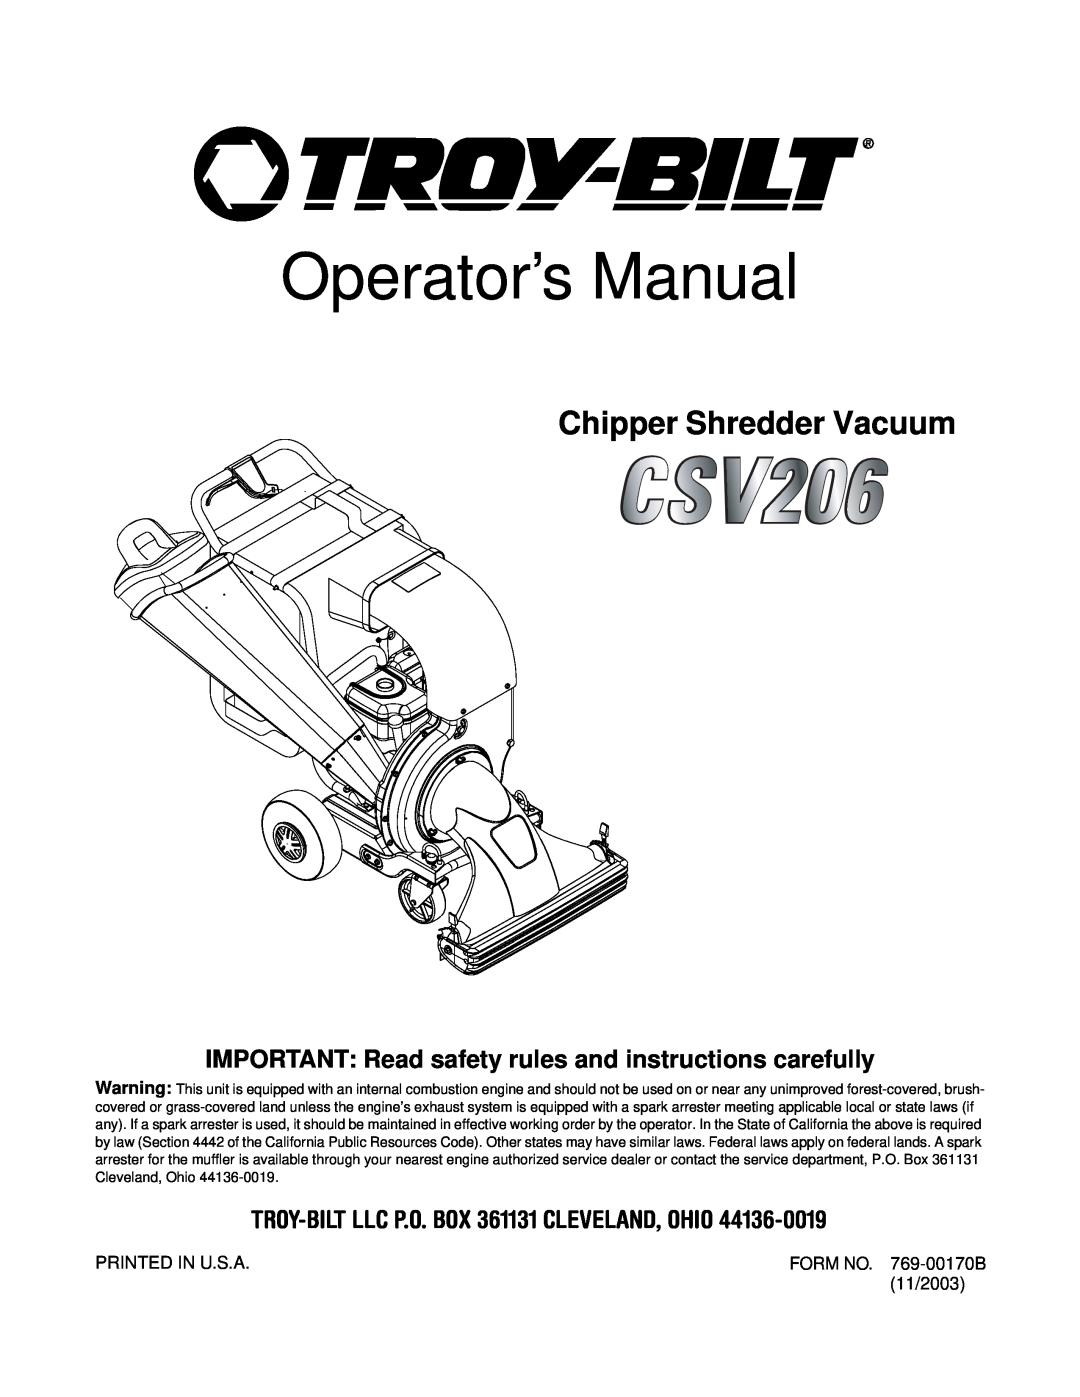 Troy-Bilt CSV206 manual Operator’s Manual, Chipper Shredder Vacuum, TROY-BILTLLC P.O. BOX 361131 CLEVELAND, OHIO 